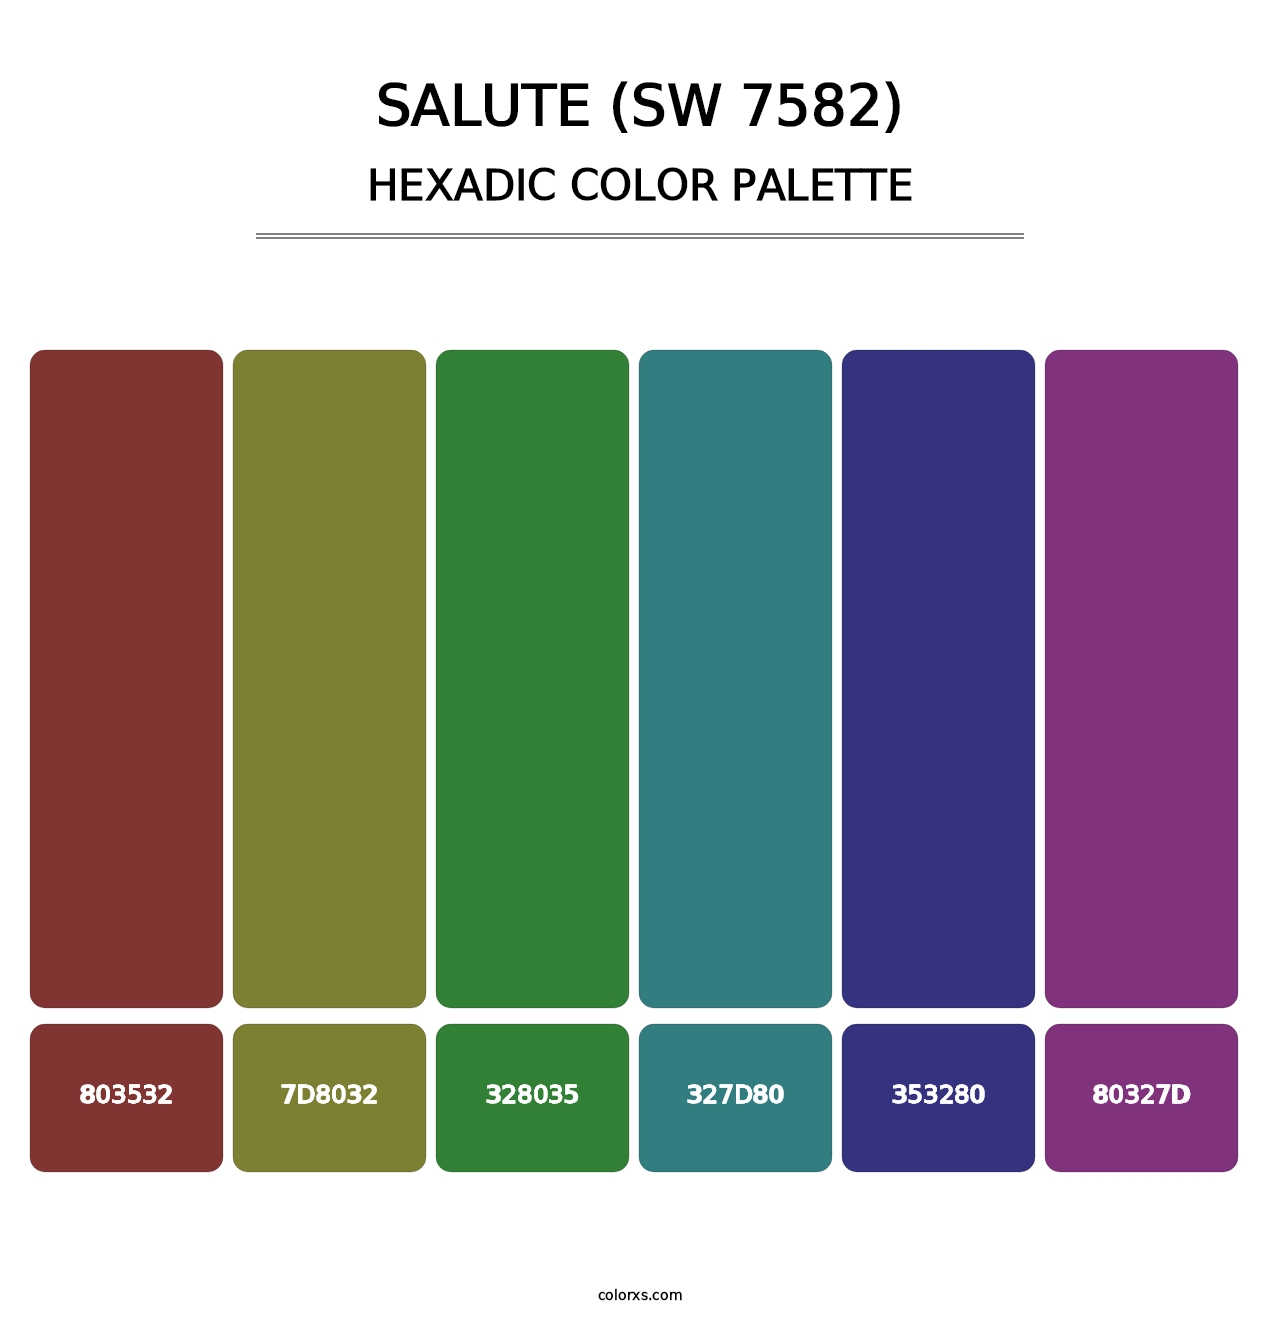 Salute (SW 7582) - Hexadic Color Palette